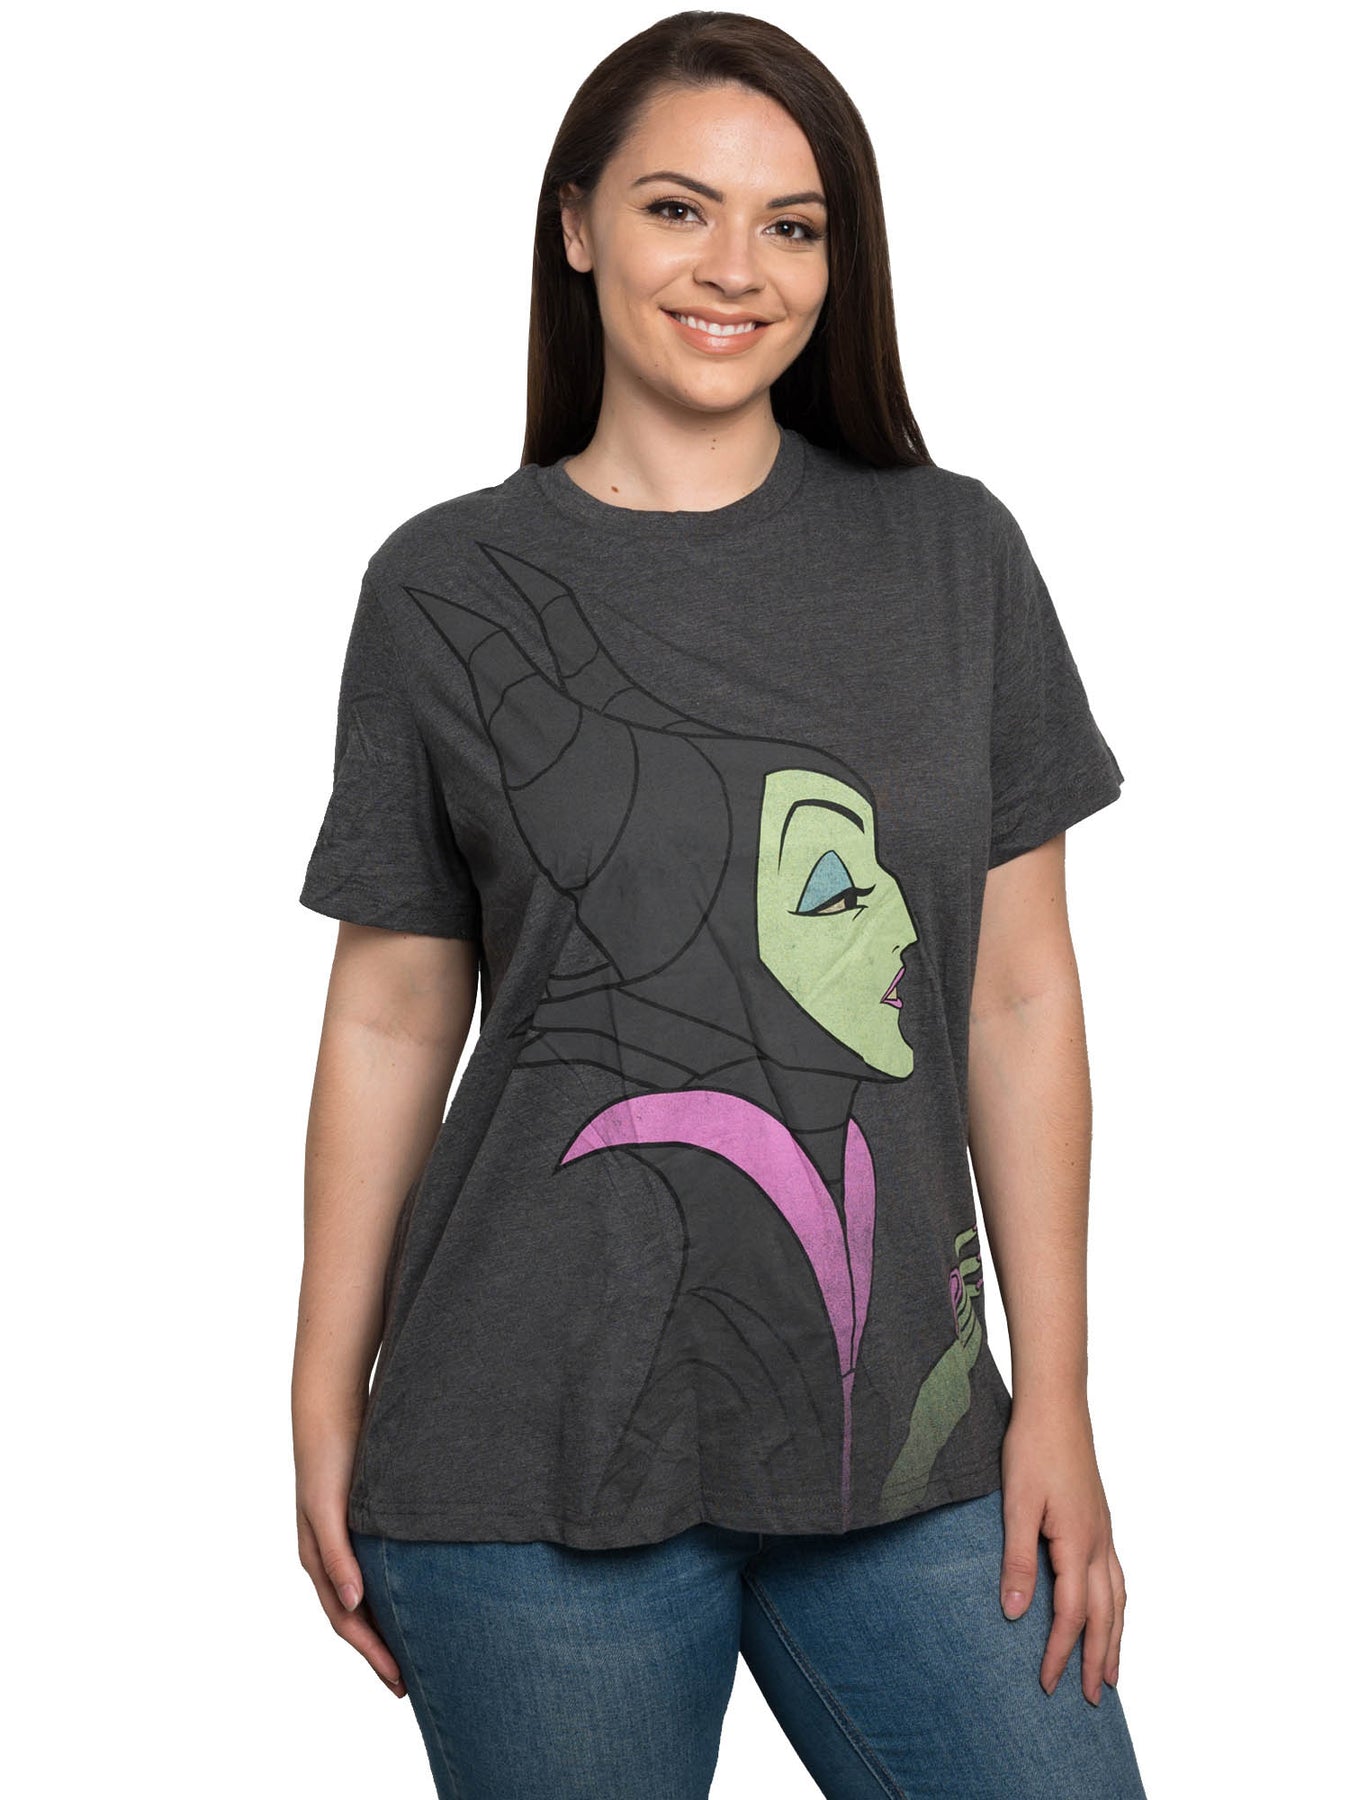 Disney Women's Plus Size Maleficent T-Shirt Villain Costume Tee